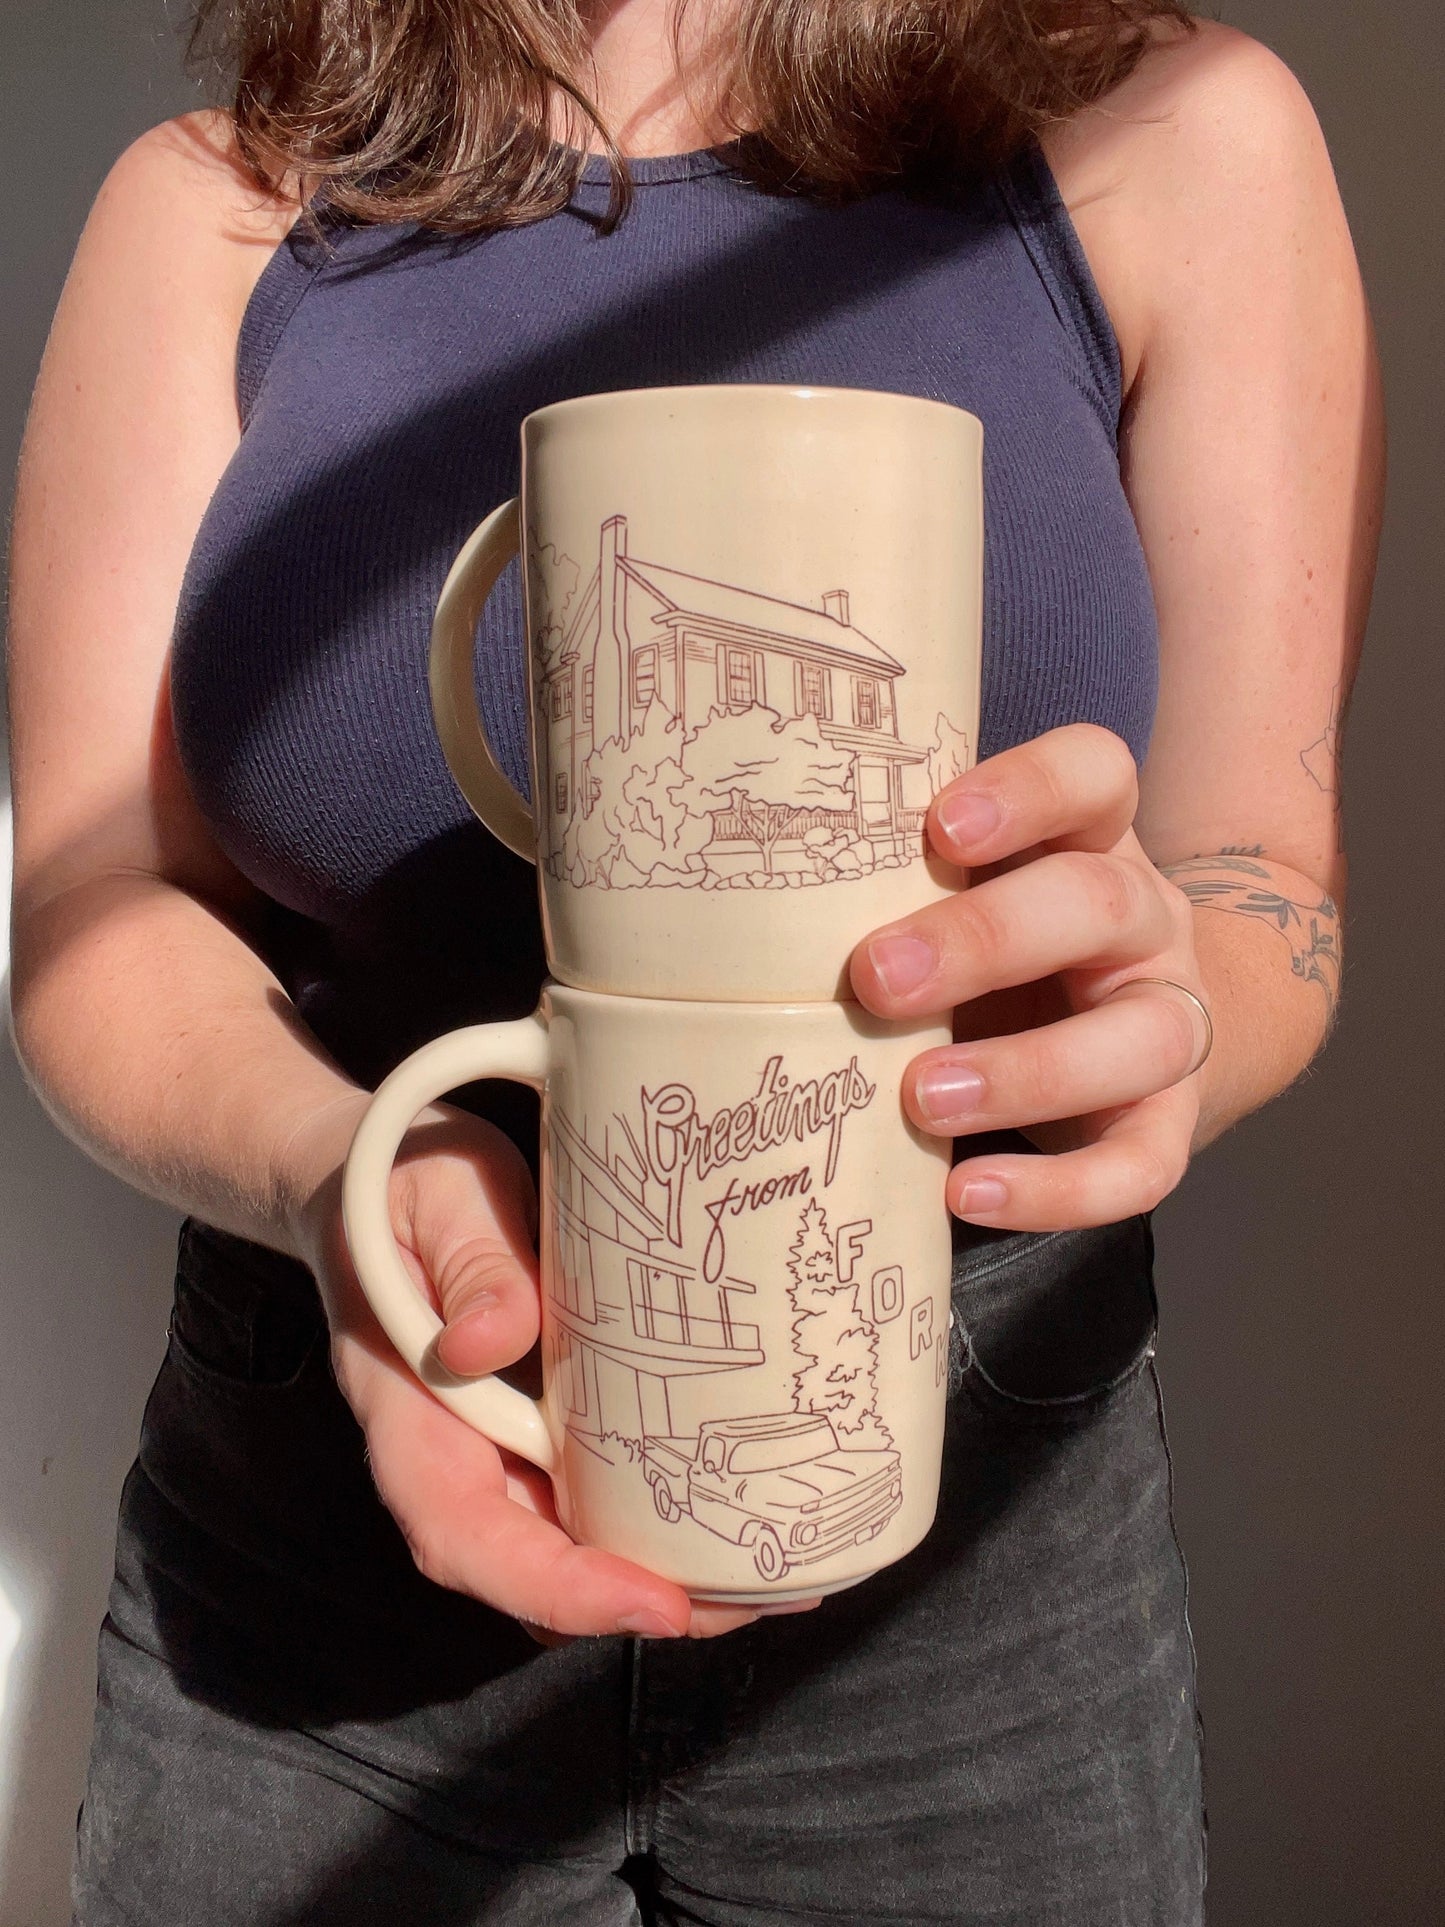 custom mug: with gaza aid donation